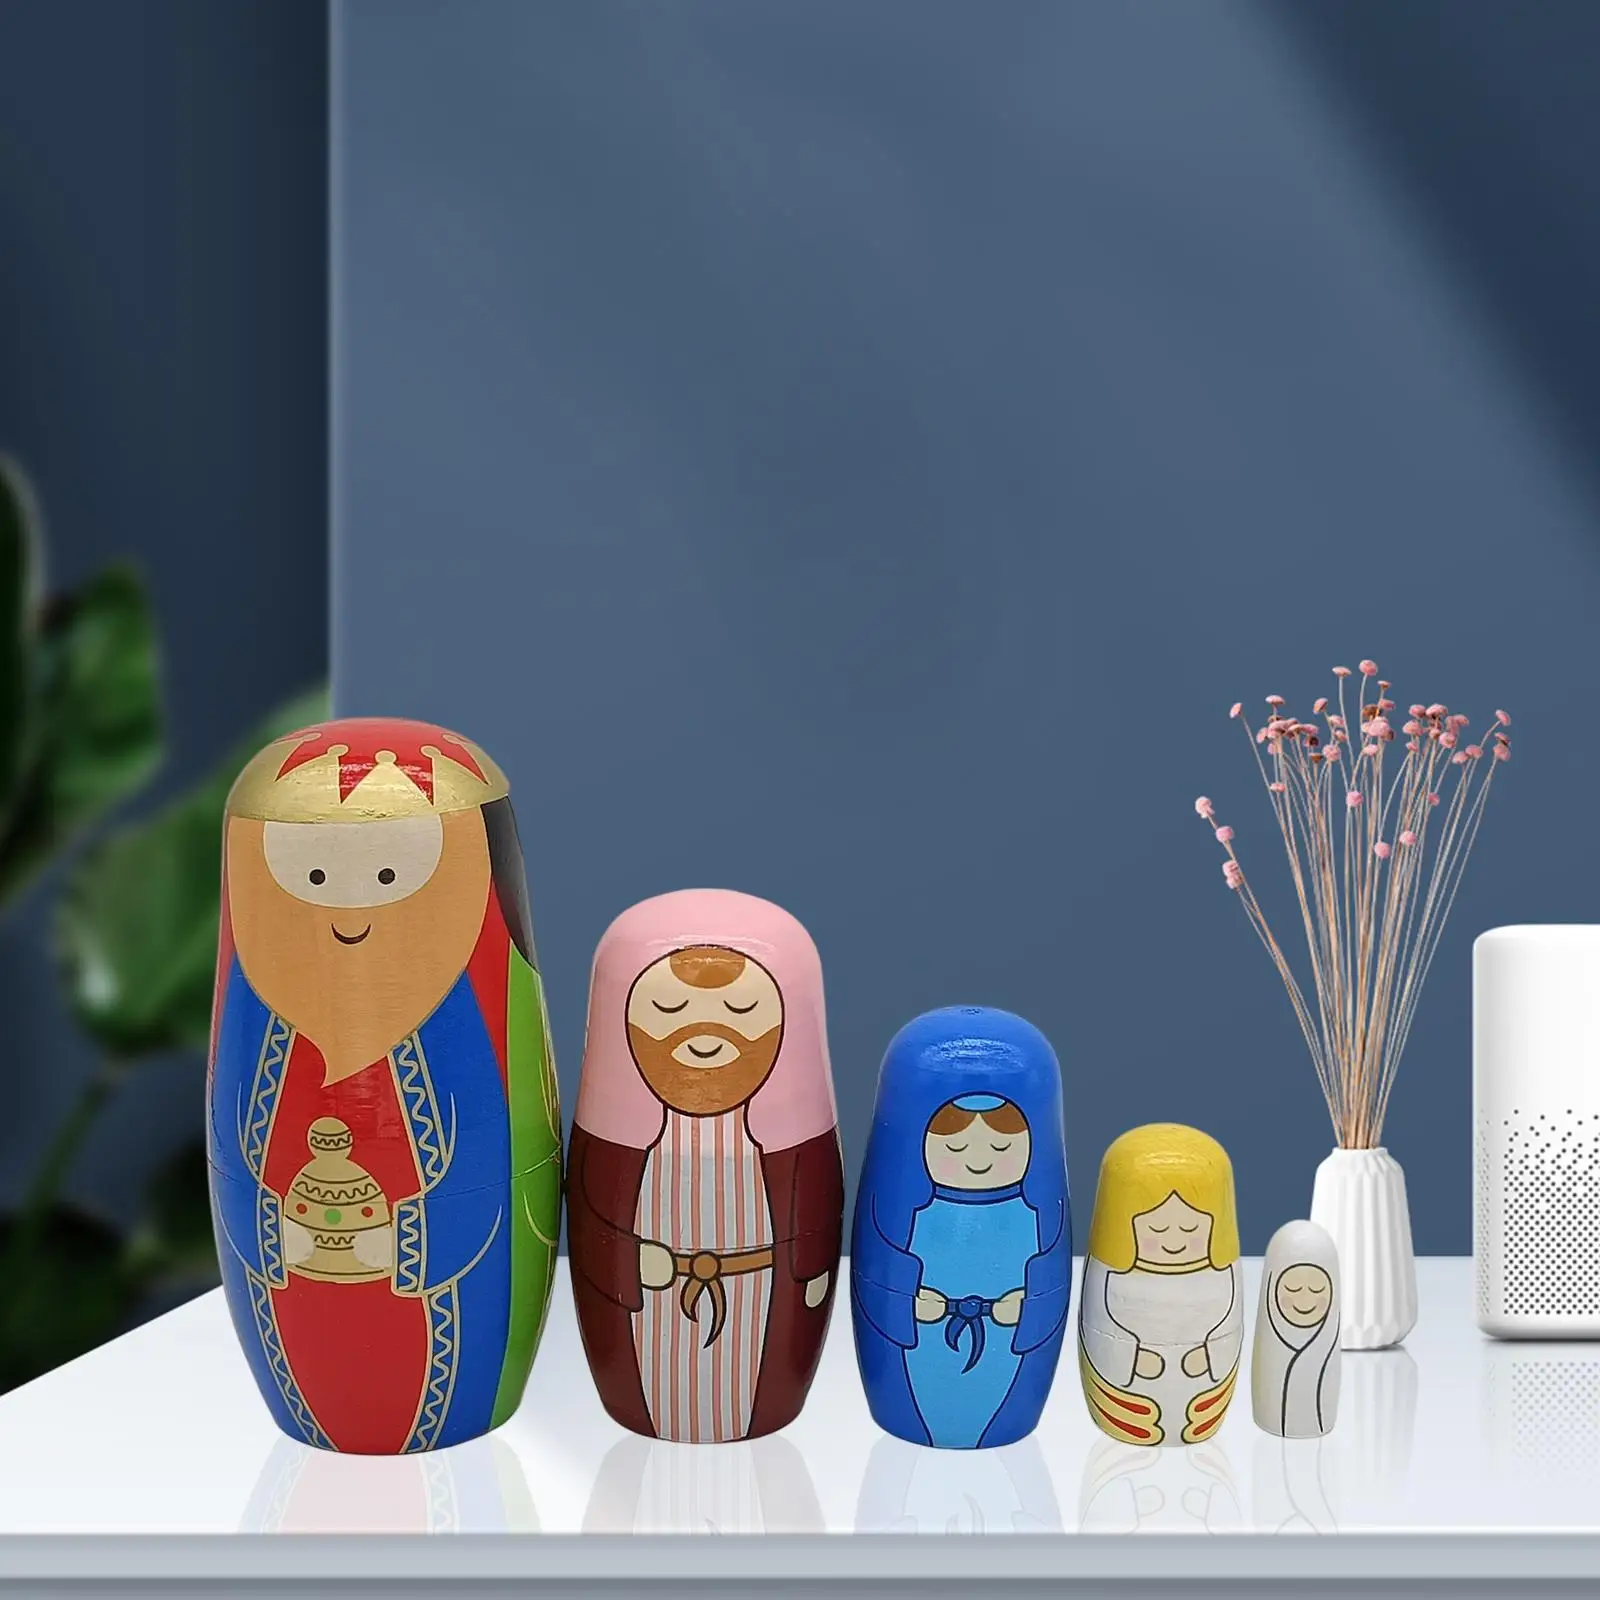 5x Cute Russian Nesting Dolls Wooden Dolls Toys Classic Ornaments King Matryoshka for Birthday Home, Christmas Kids Children